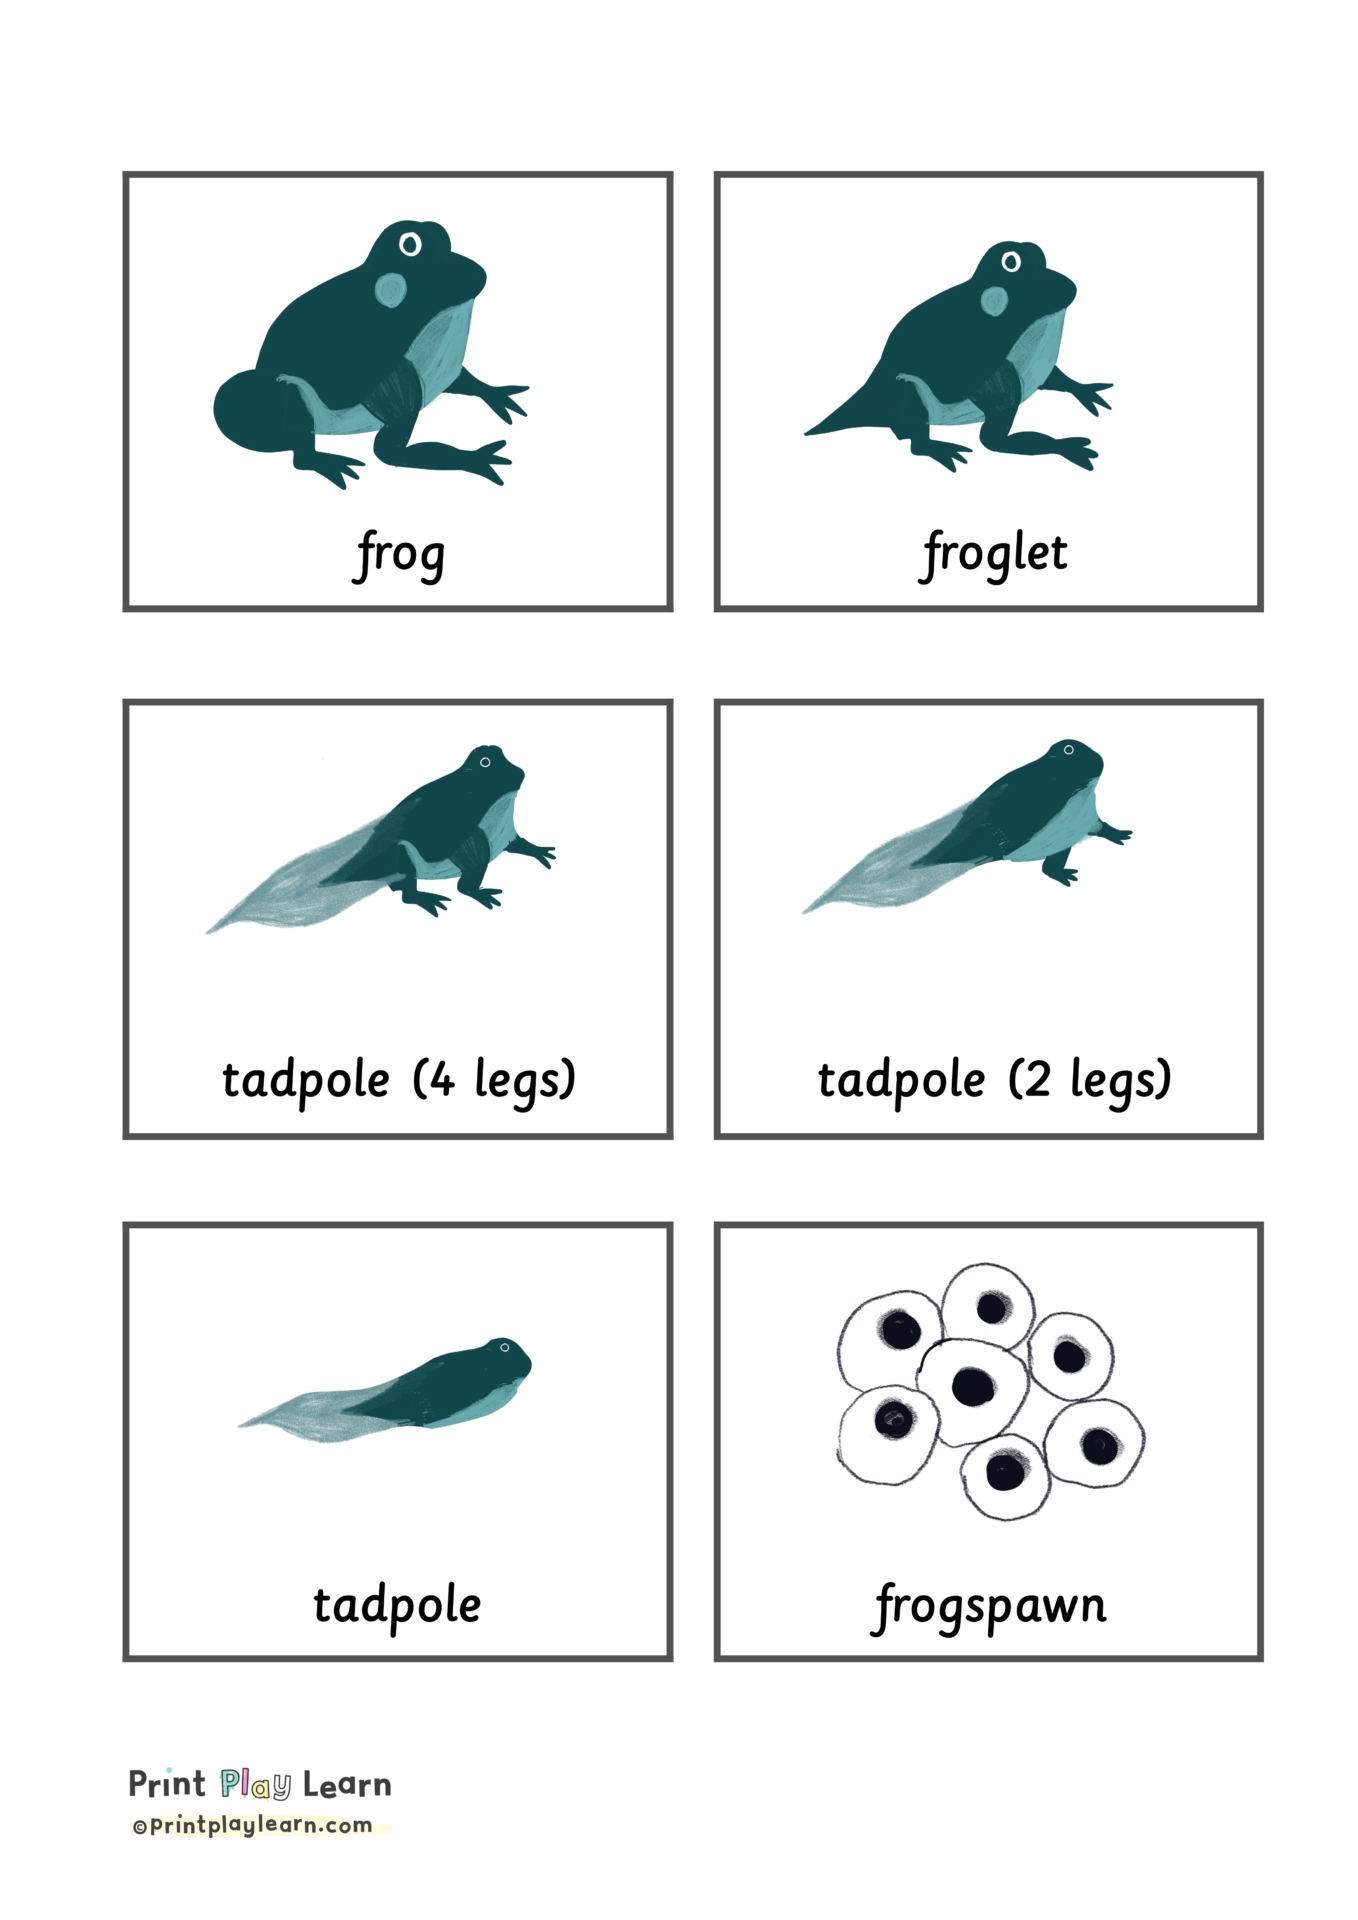 frog-life-cycle-flashcards-printable-teaching-resources-print-play